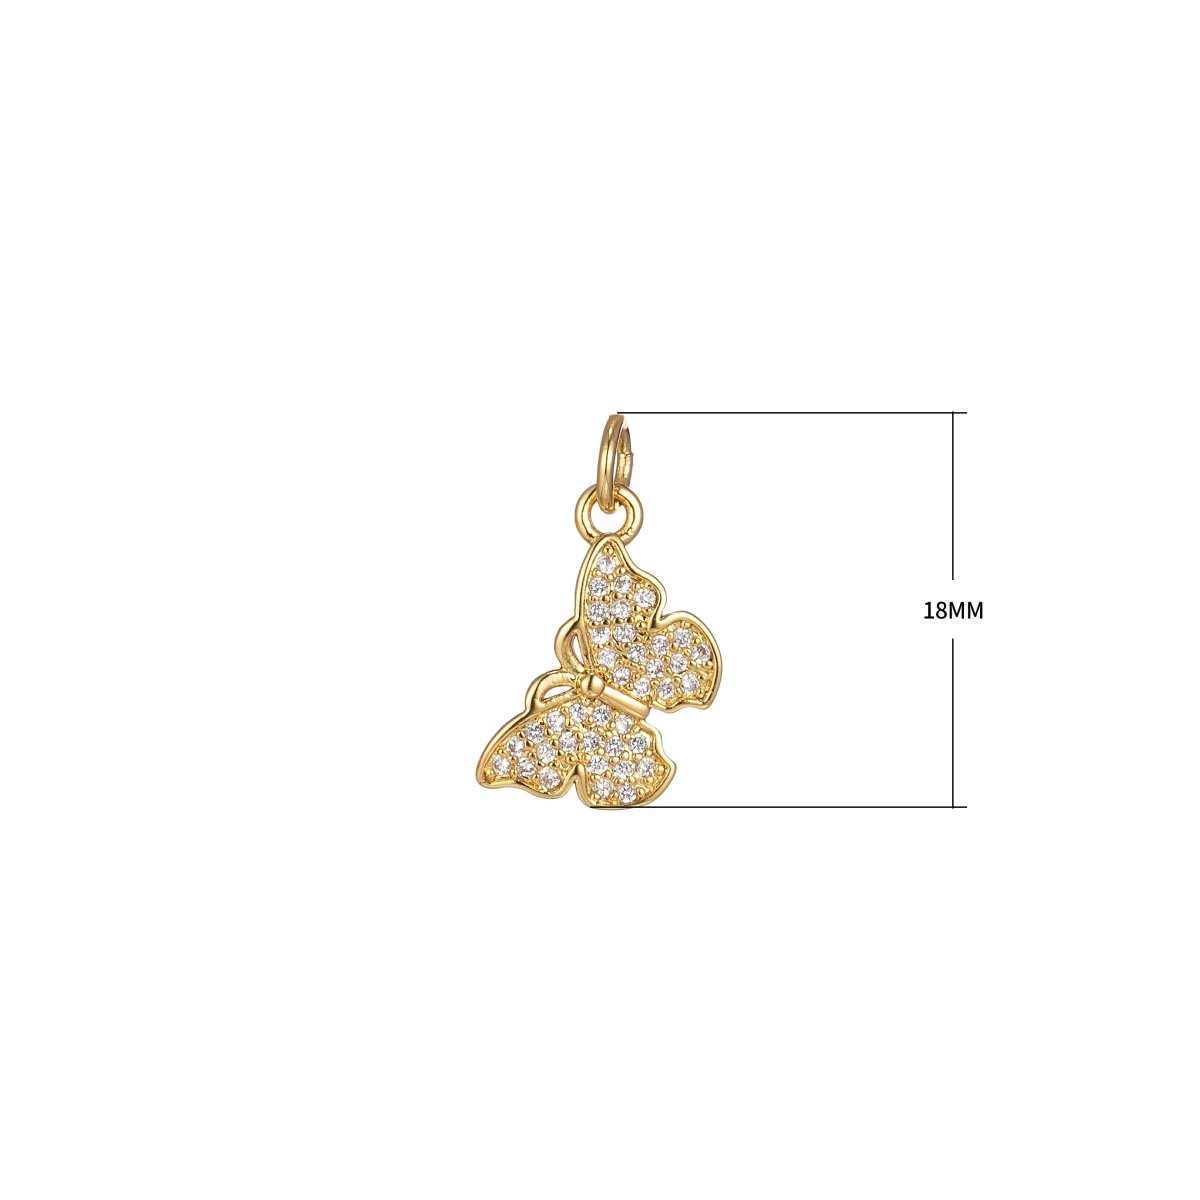 Dainty Gold Micro Pave Butterfly Charm, Cubic Zirconia Mariposa Pendant Charm, Charm, DIY Jewelry M-244 - DLUXCA